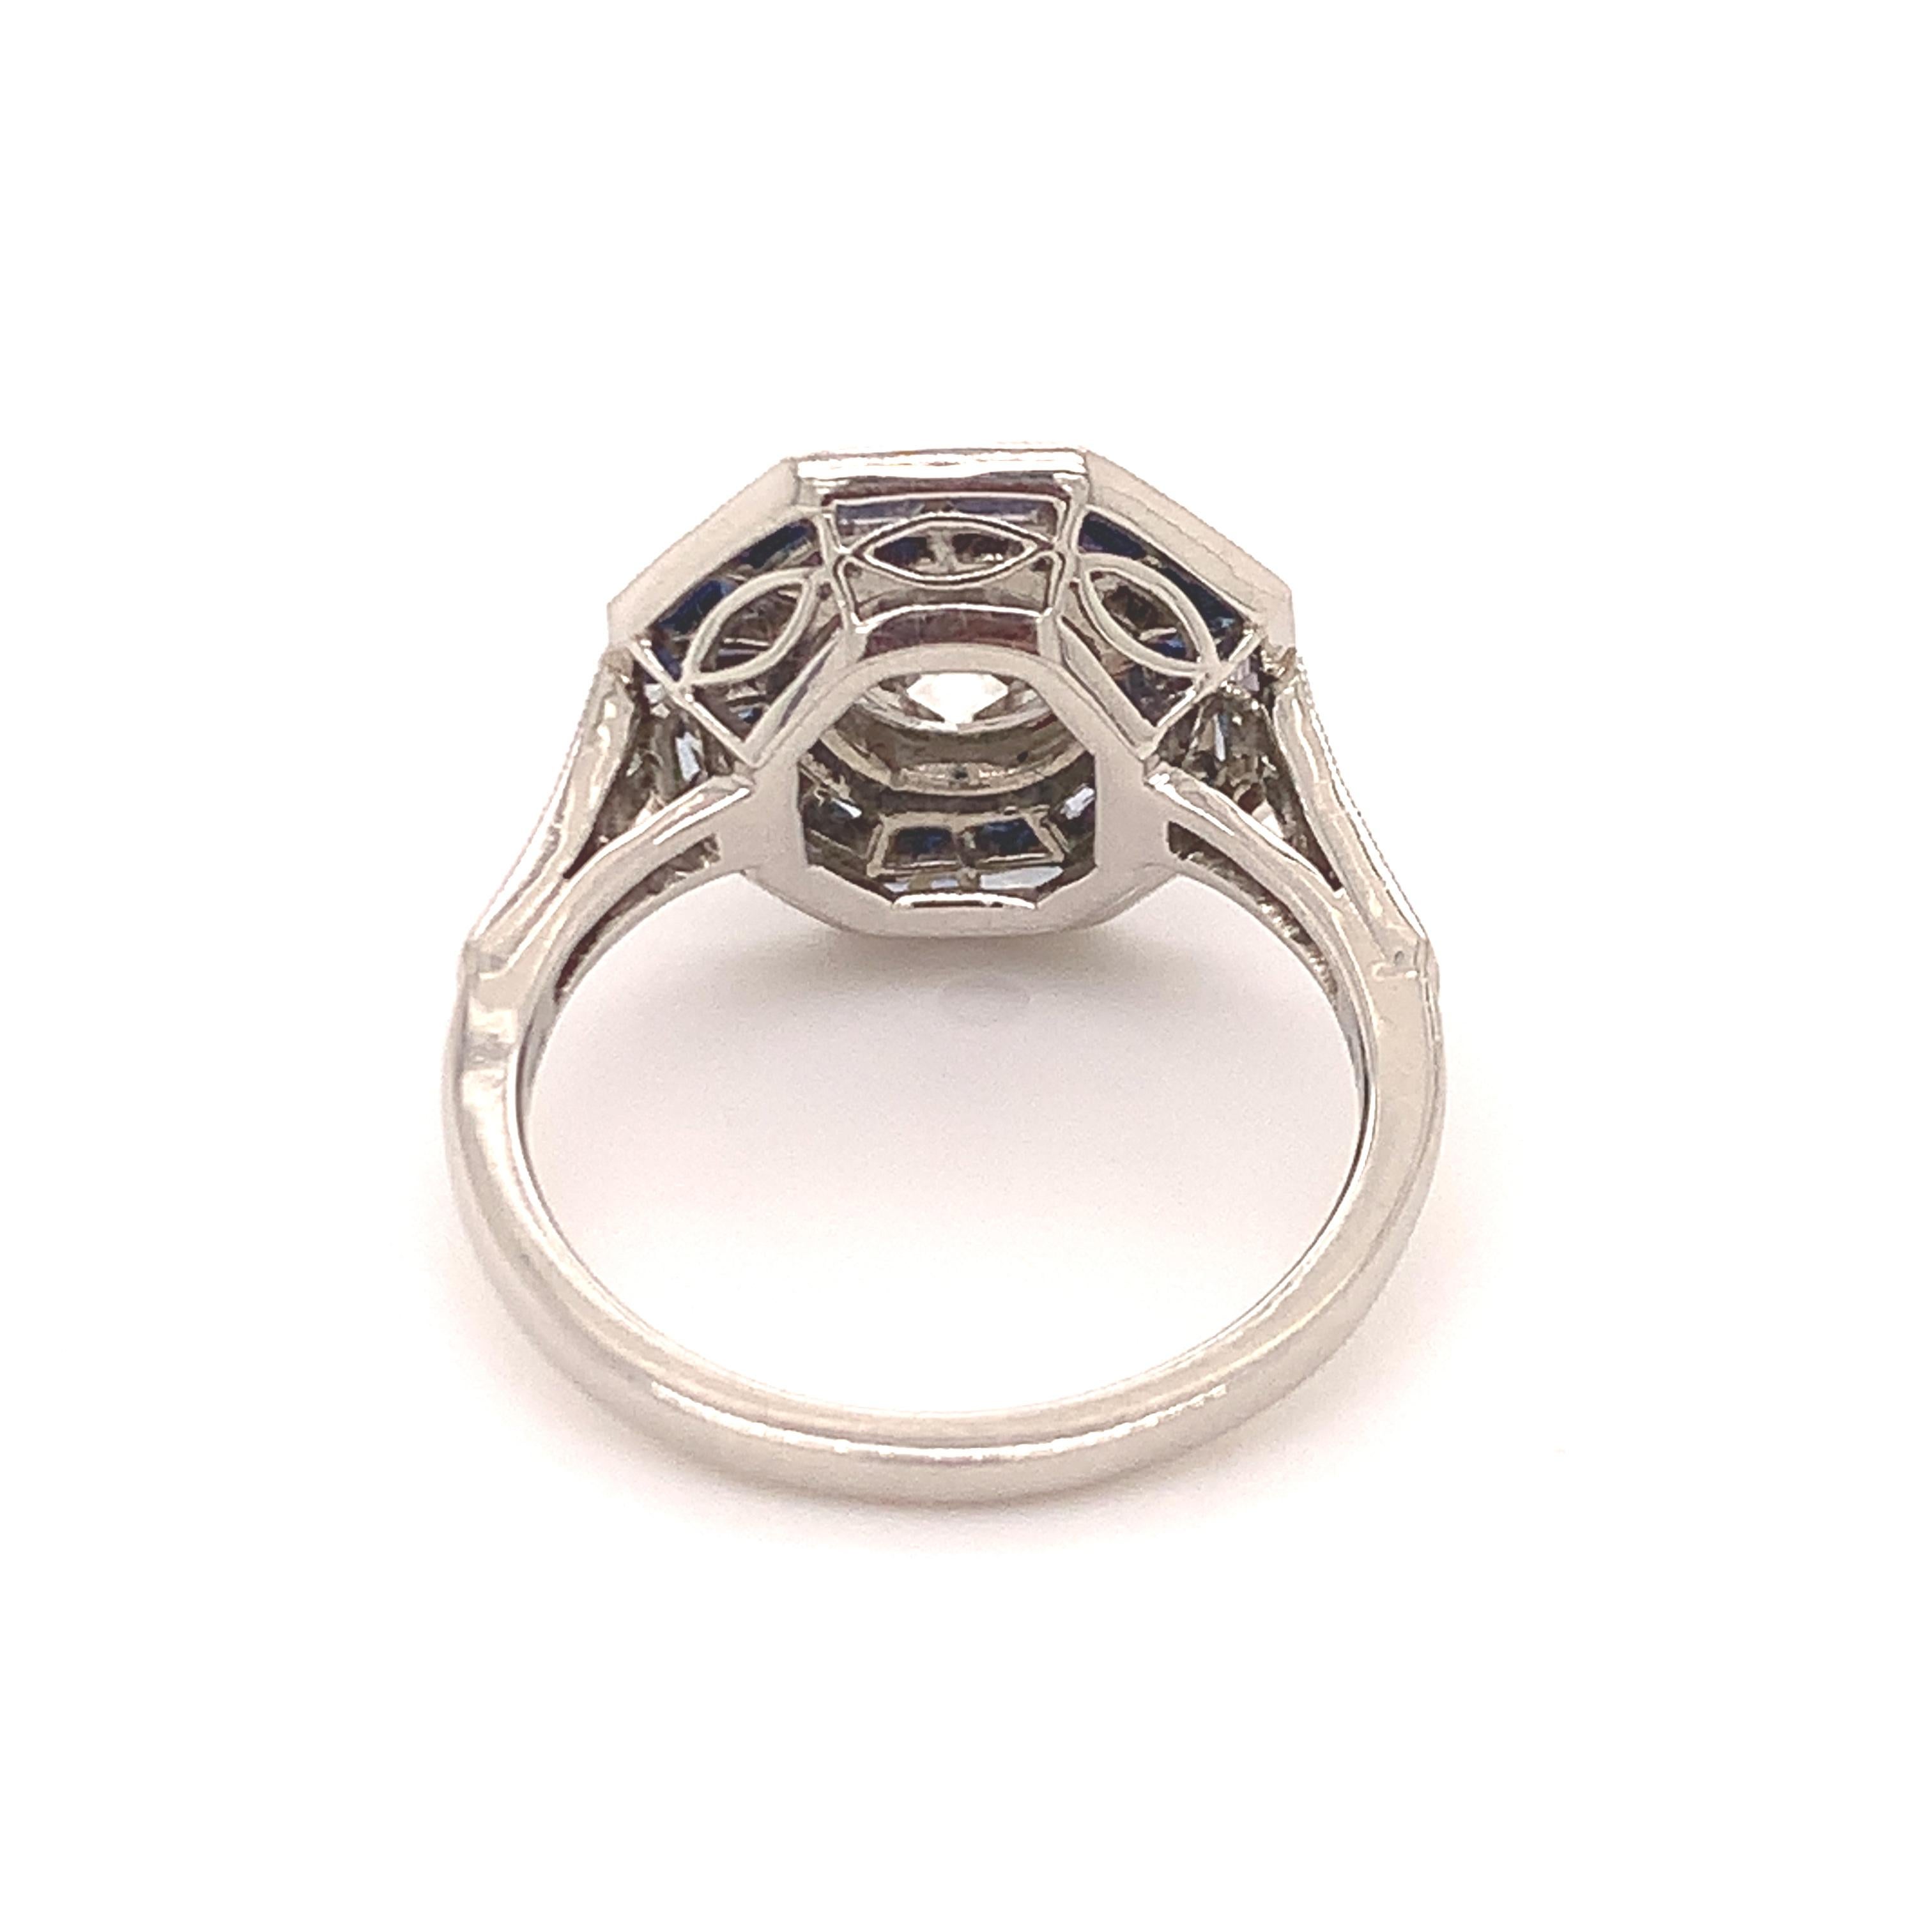 Brilliant Cut Tiffany & Co. Deco Revival Sapphire Diamond Octagonal Ring